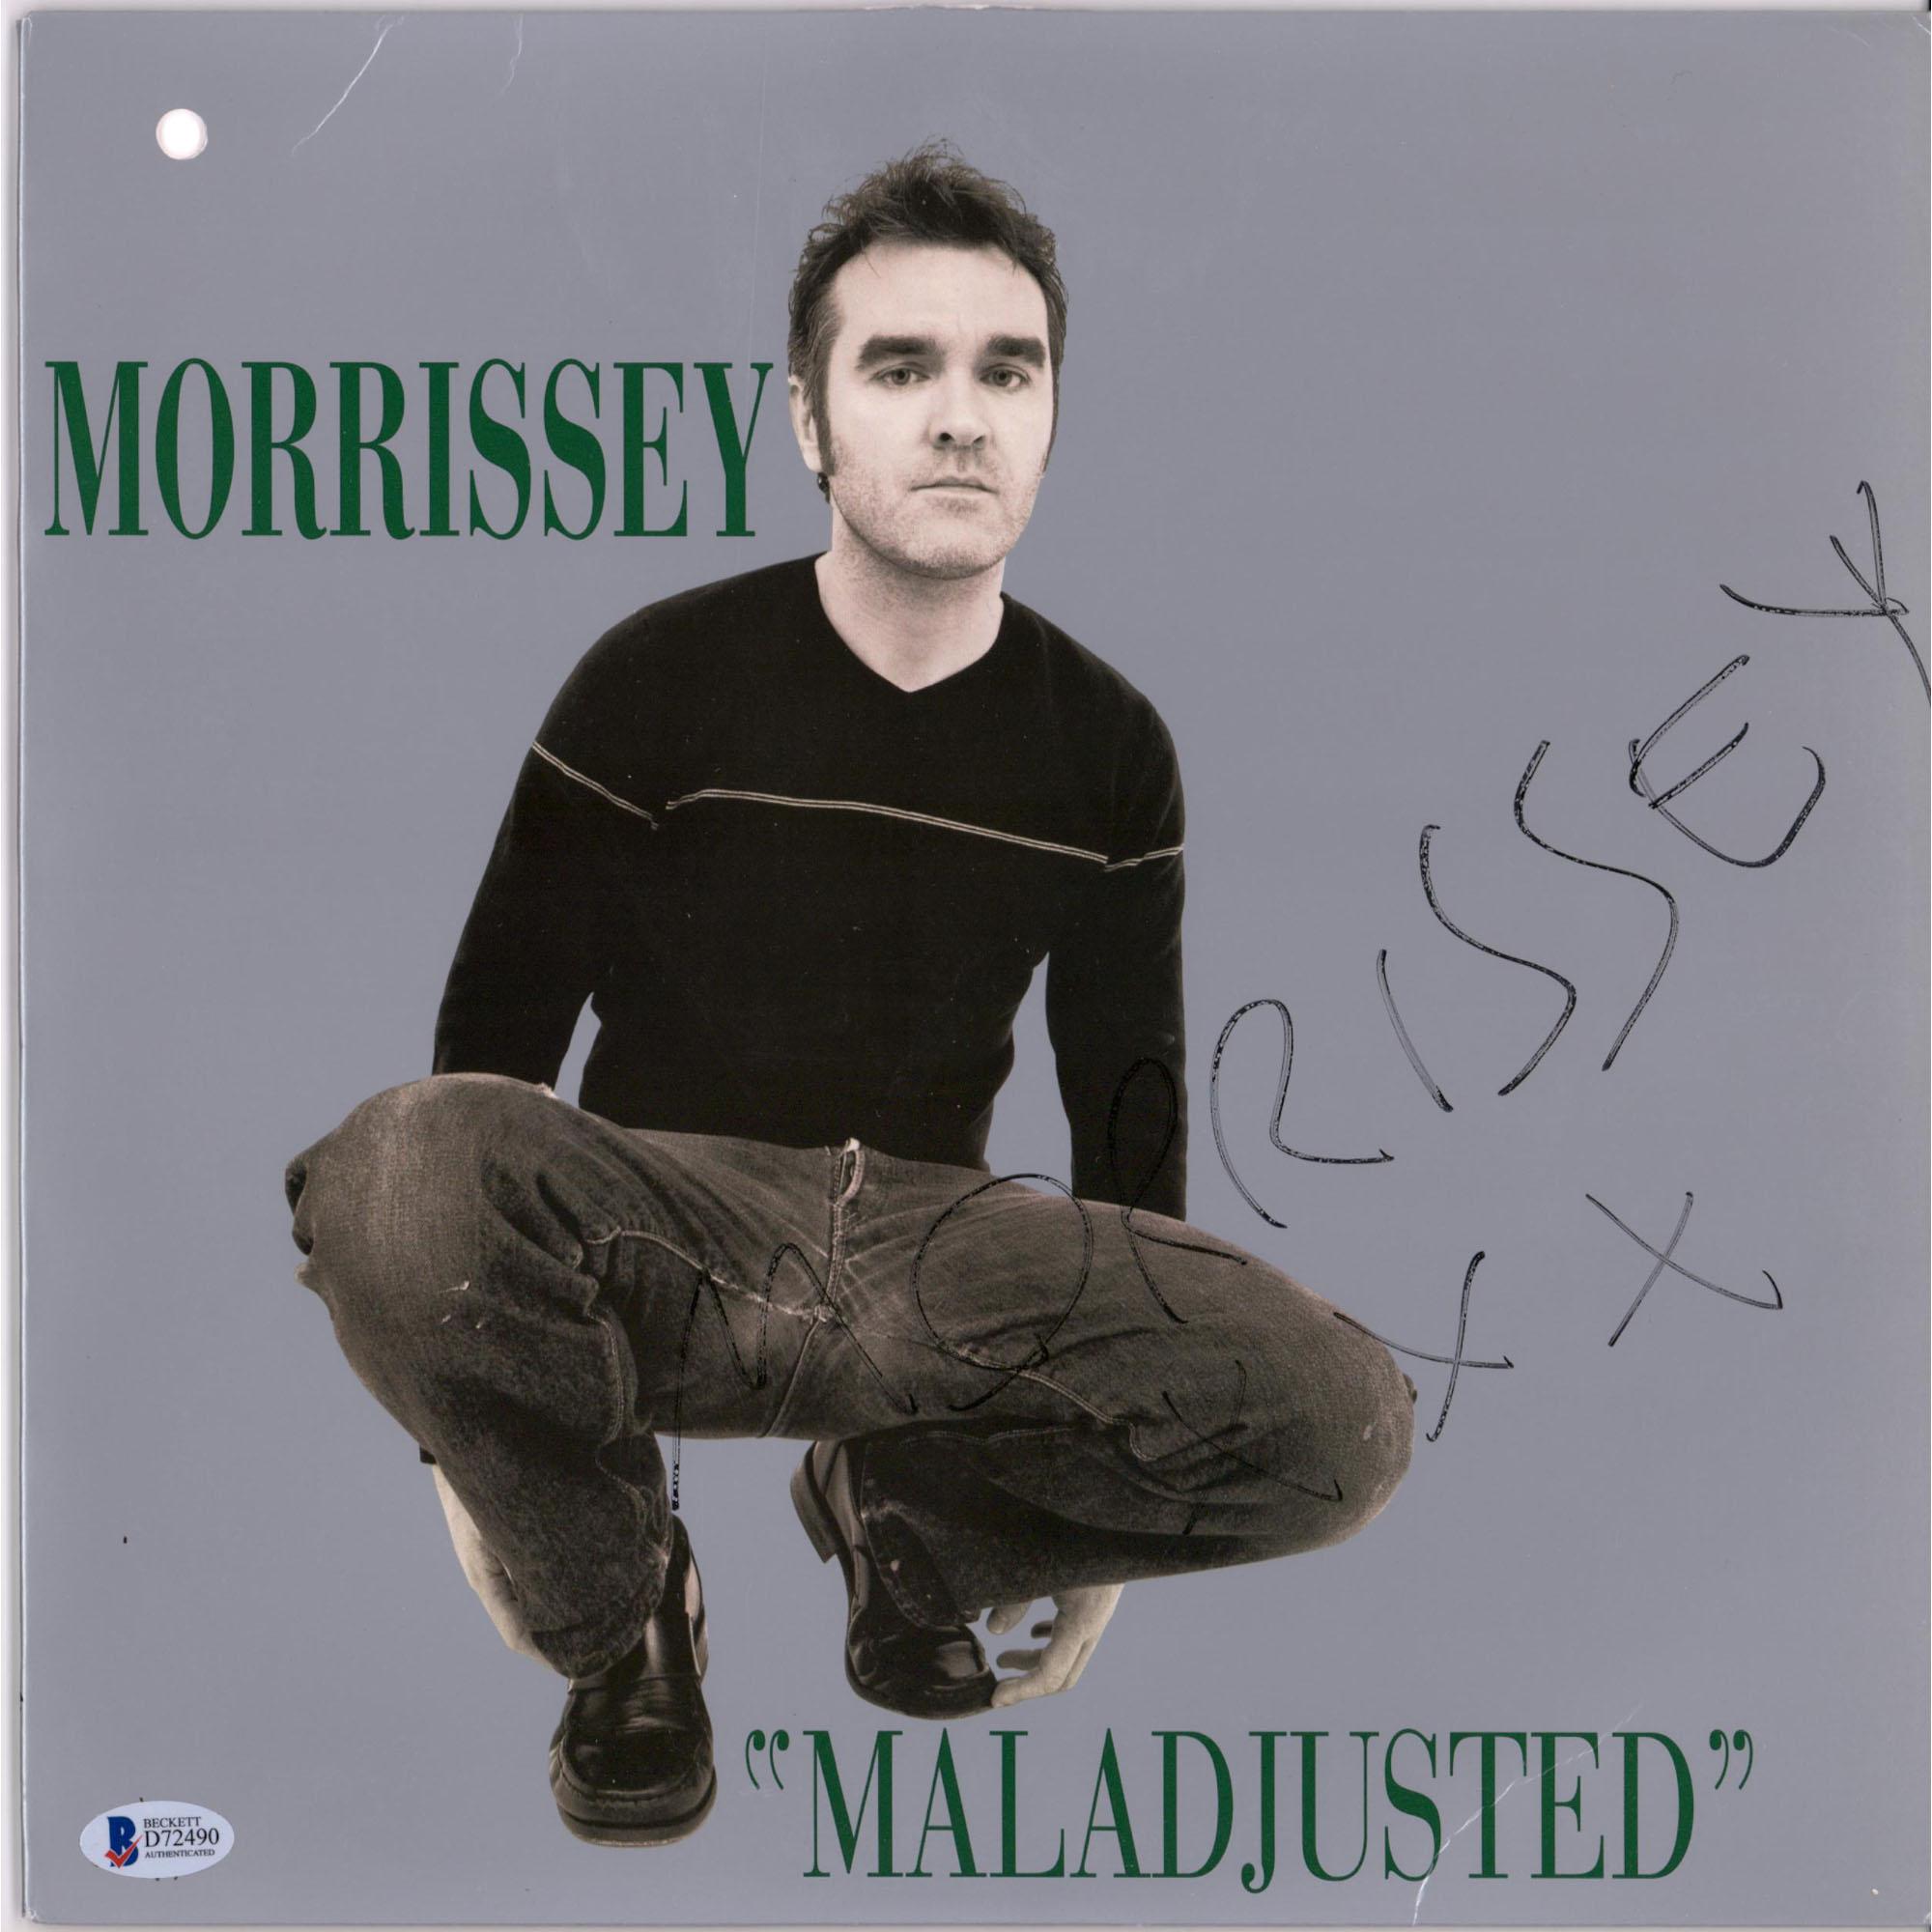 morrissey-autographed-maladjusted-lp-album-bas3-t9550496-2000.jpg